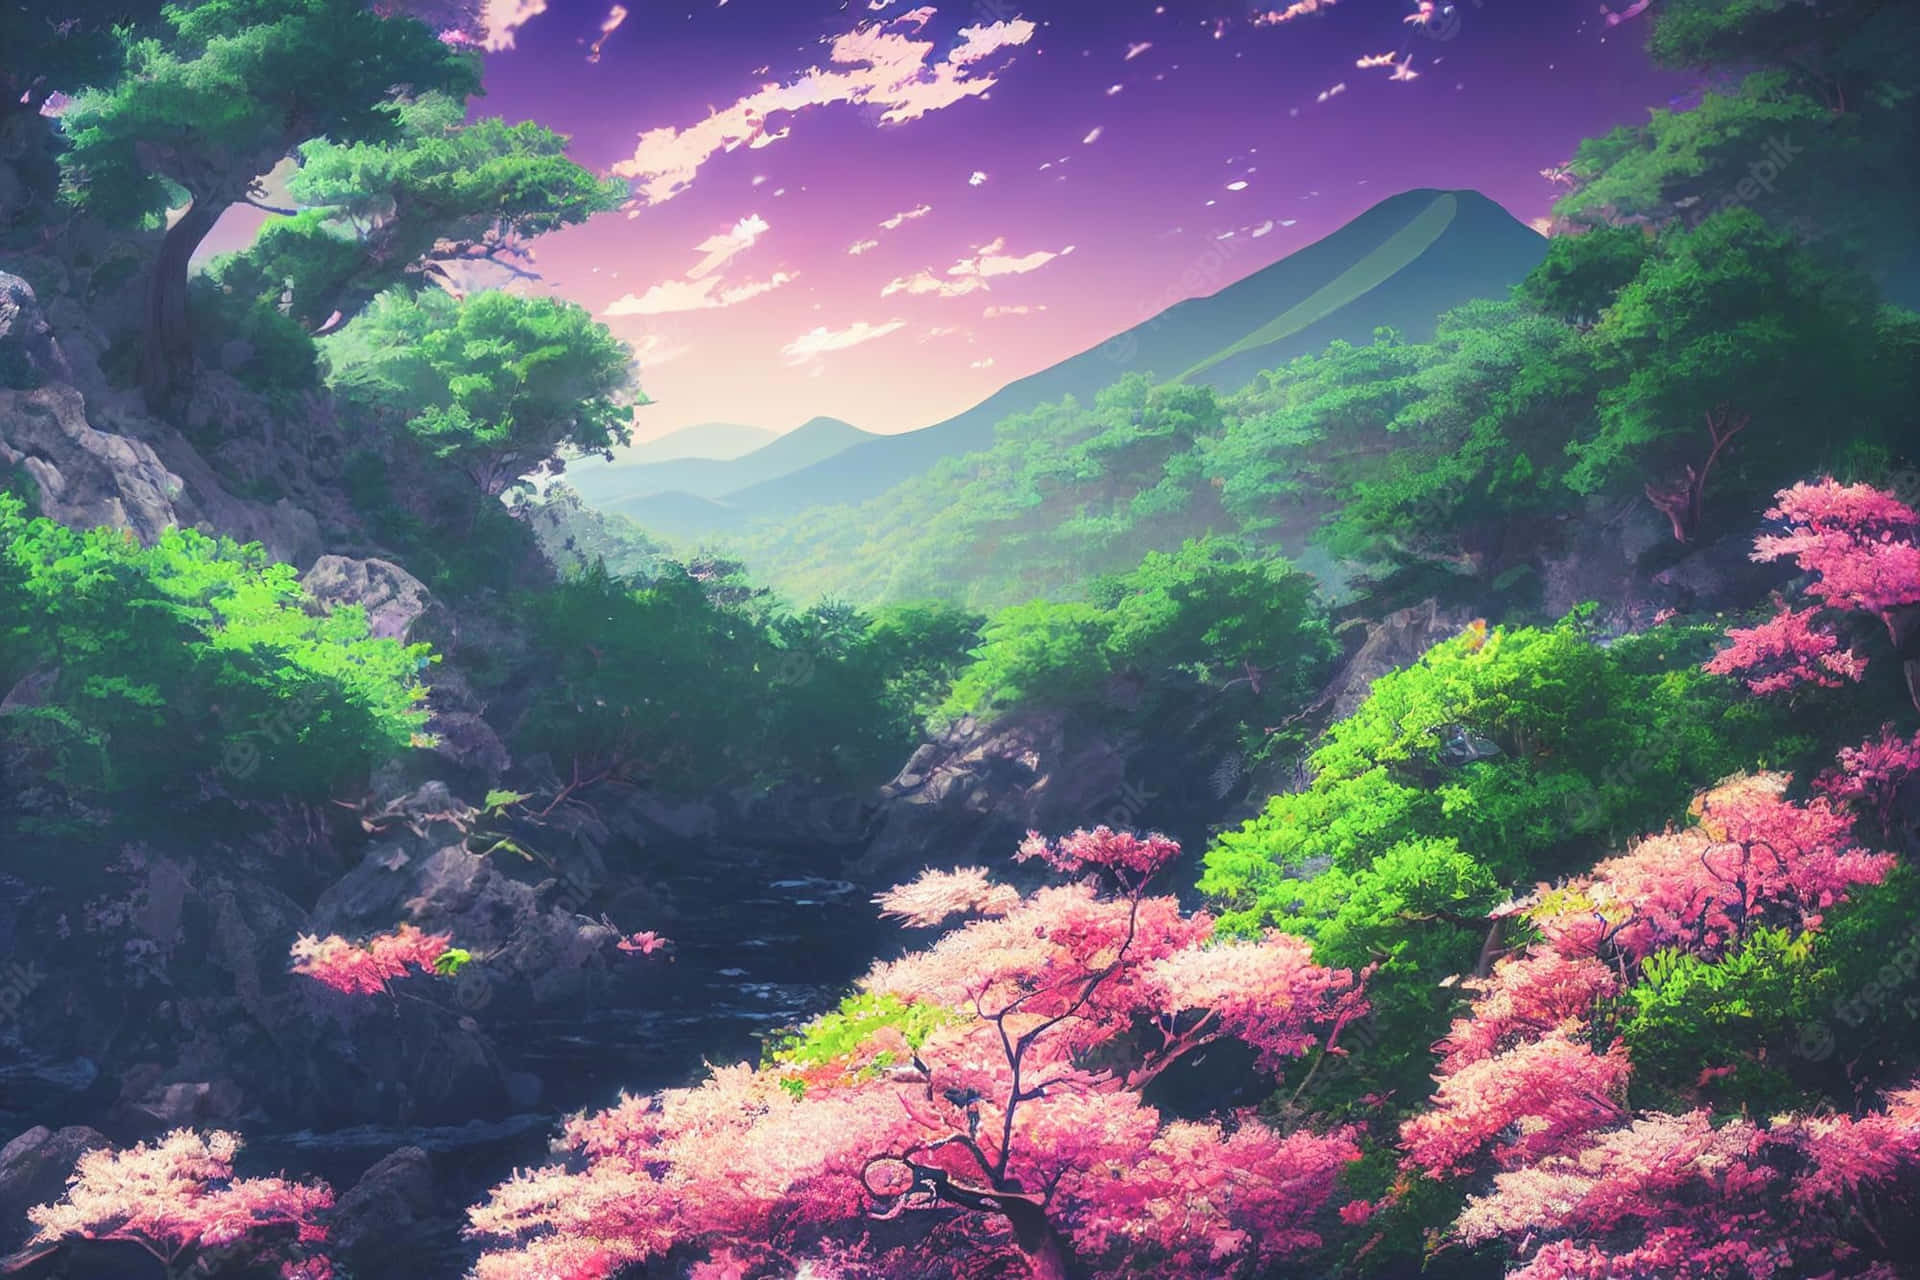 Anime spring | Anime scenery wallpaper, Scenery wallpaper, Phone wallpaper